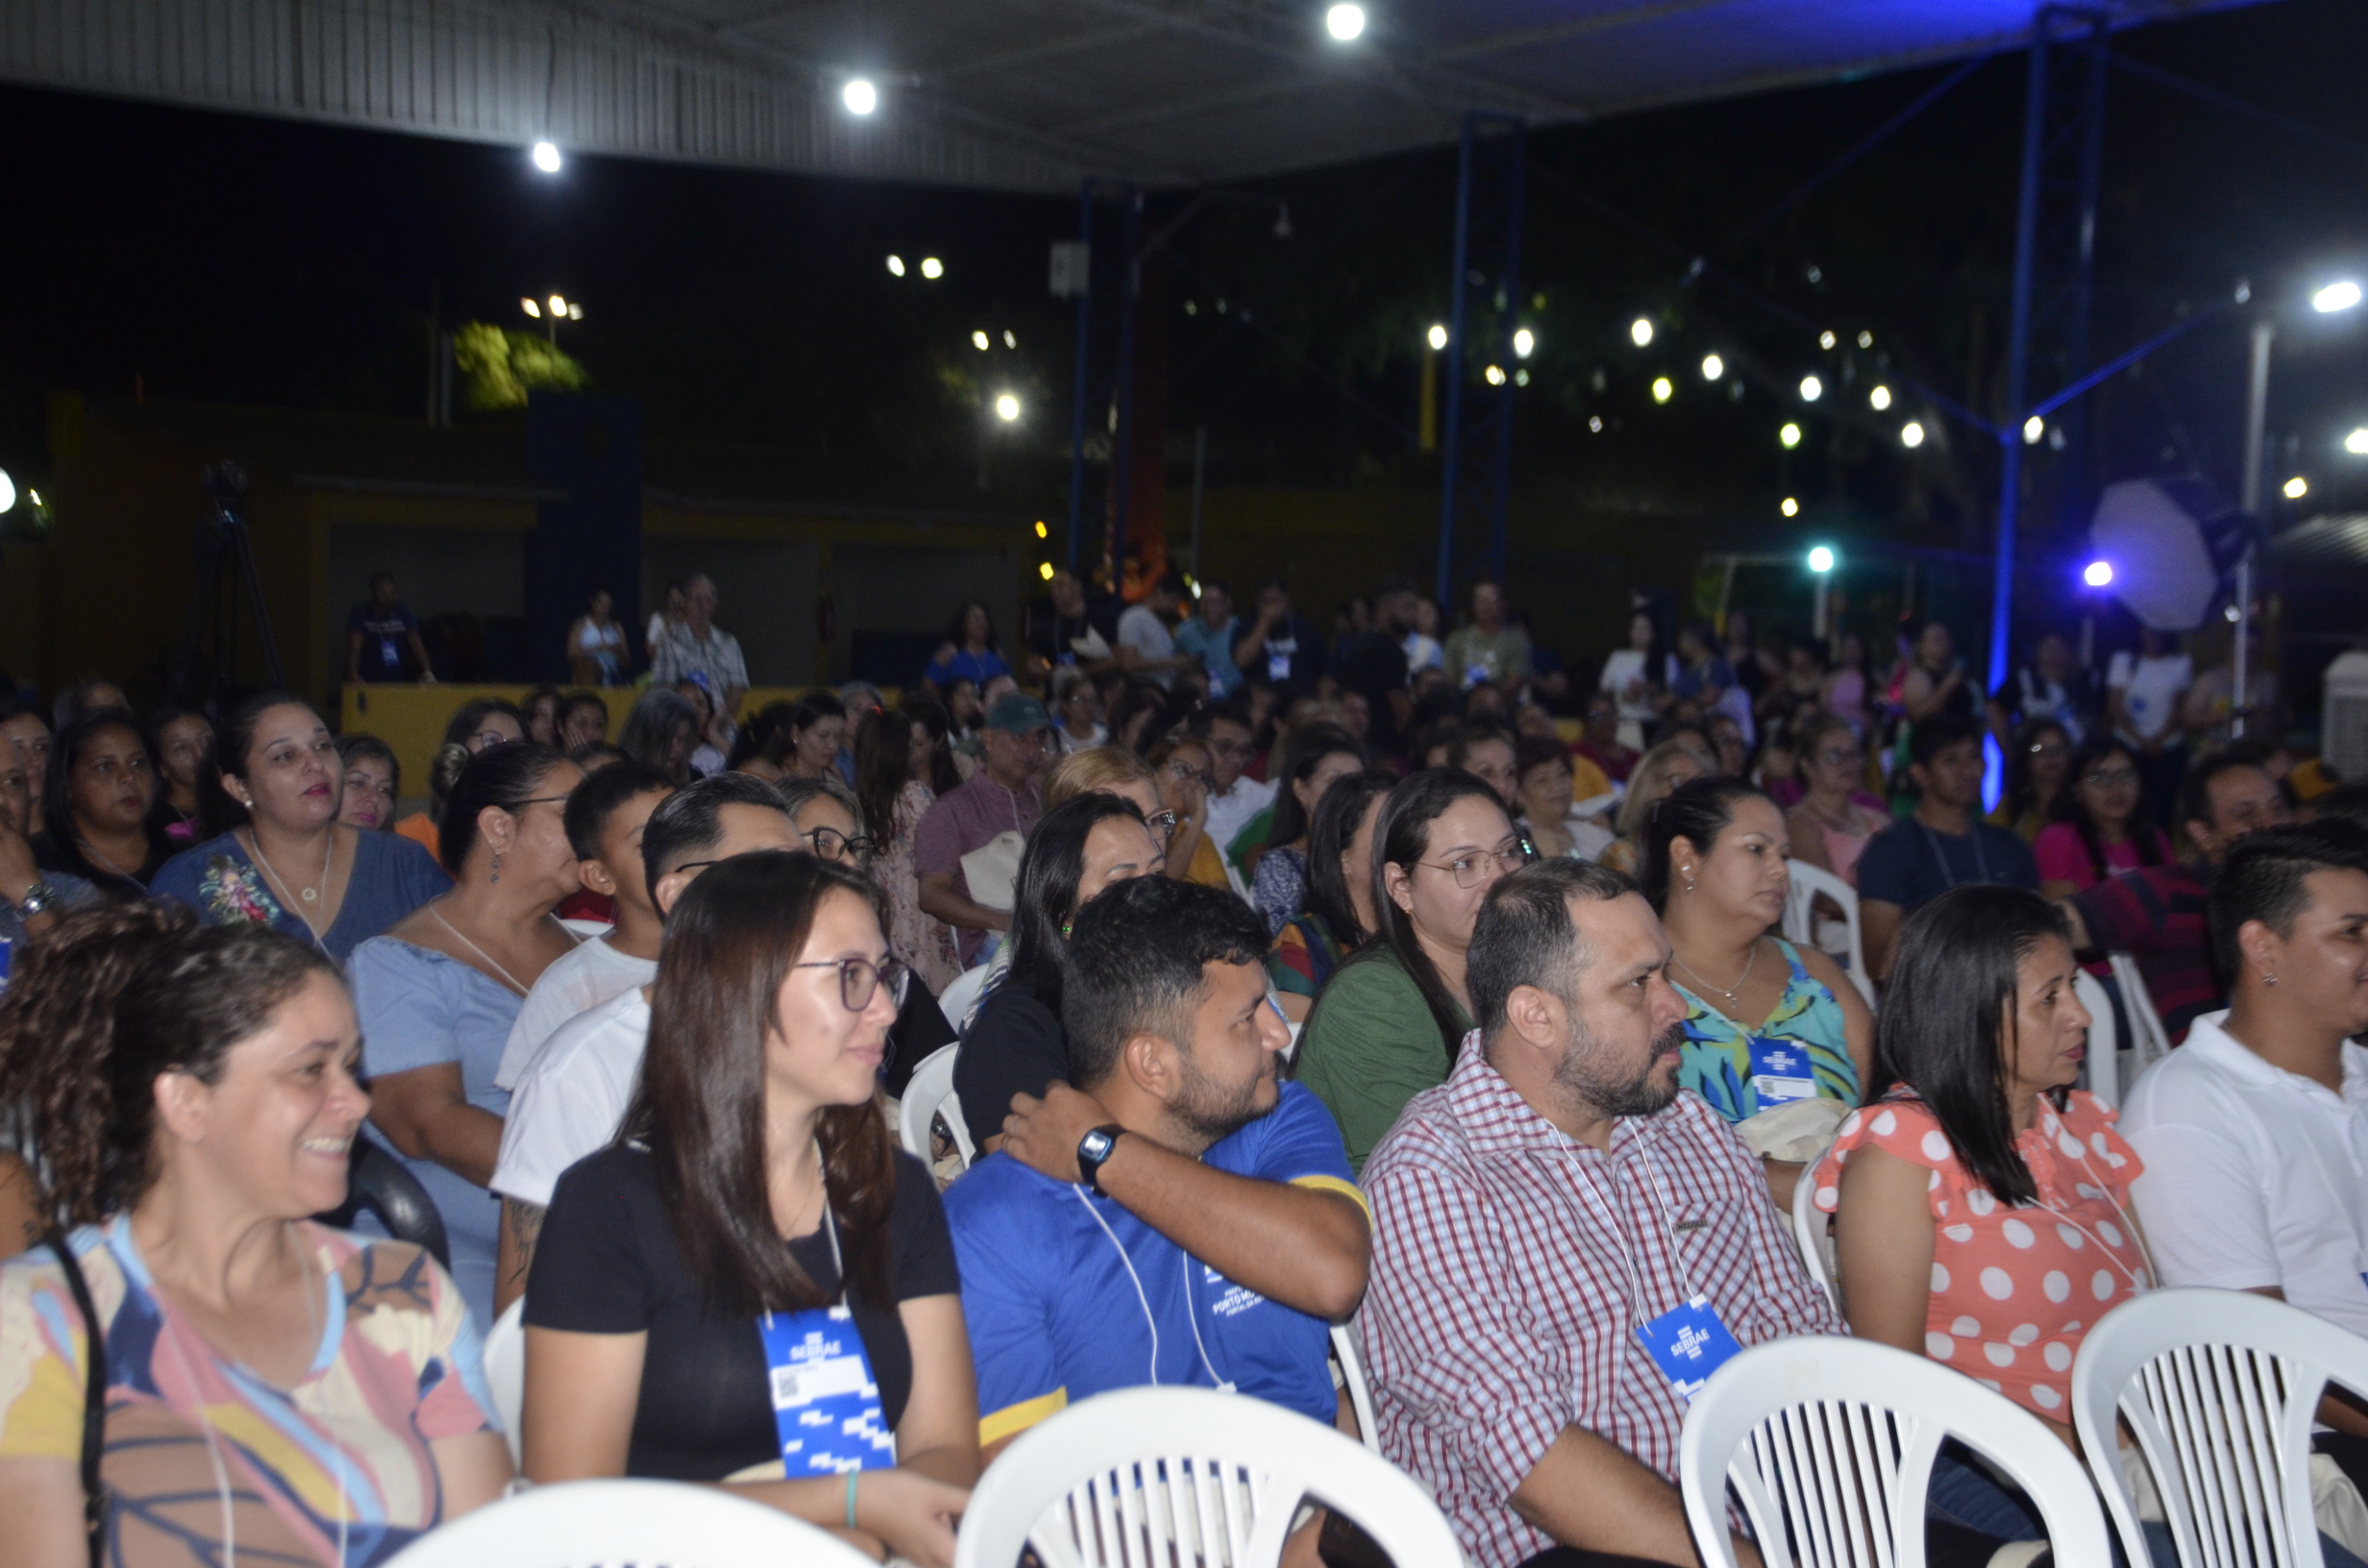 Cidade Empreendedora: confira as fotos do evento “Professor Transformador”